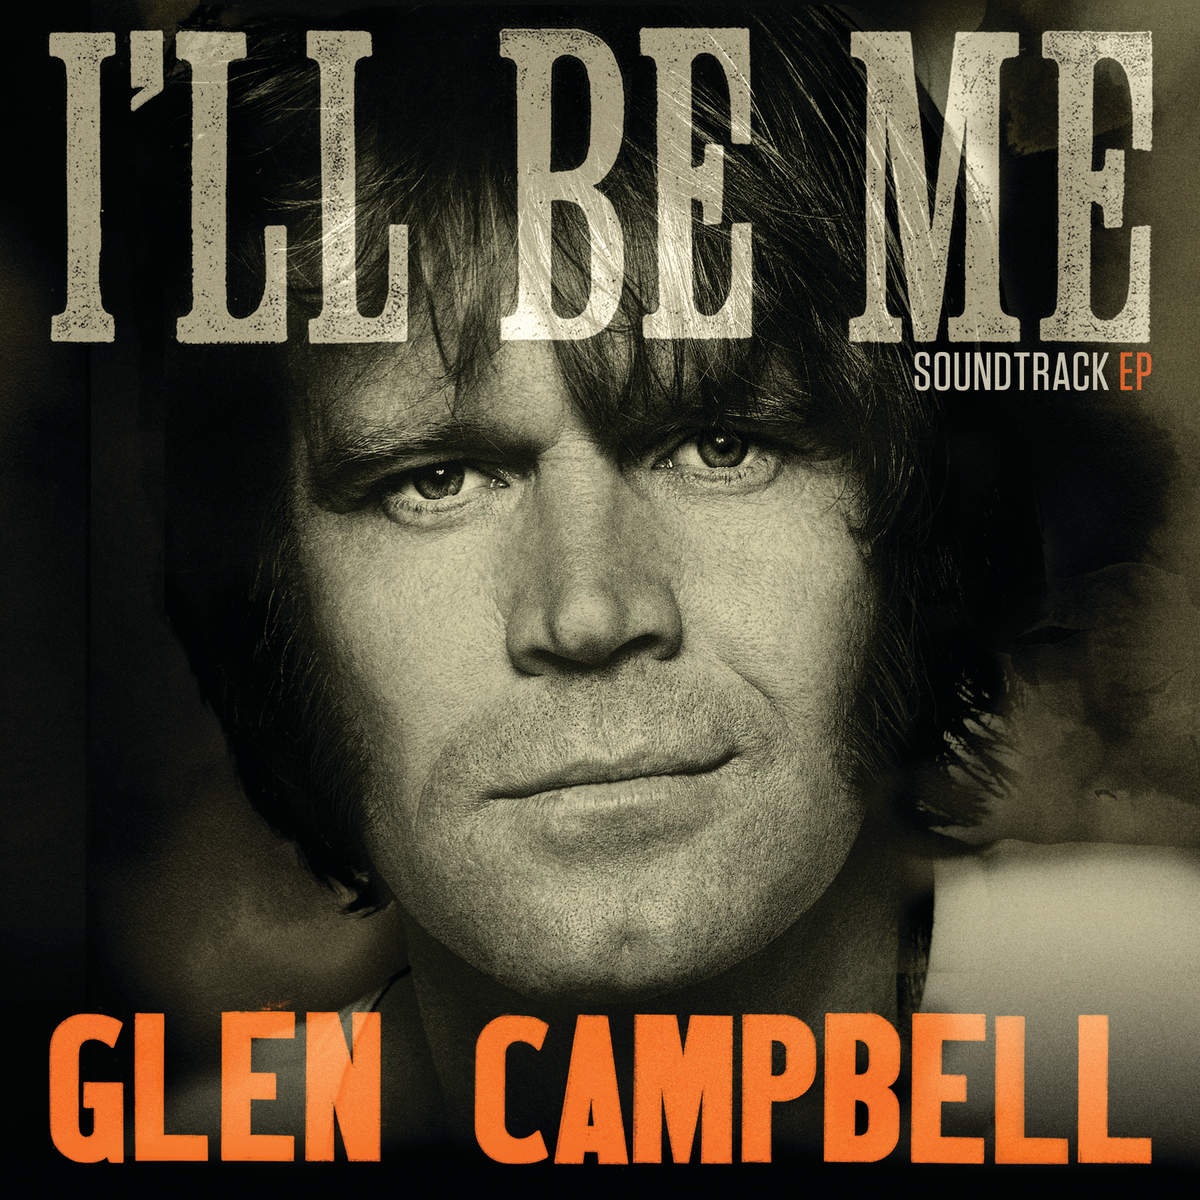 Glen Campbell I'll Be Me Soundtrack 